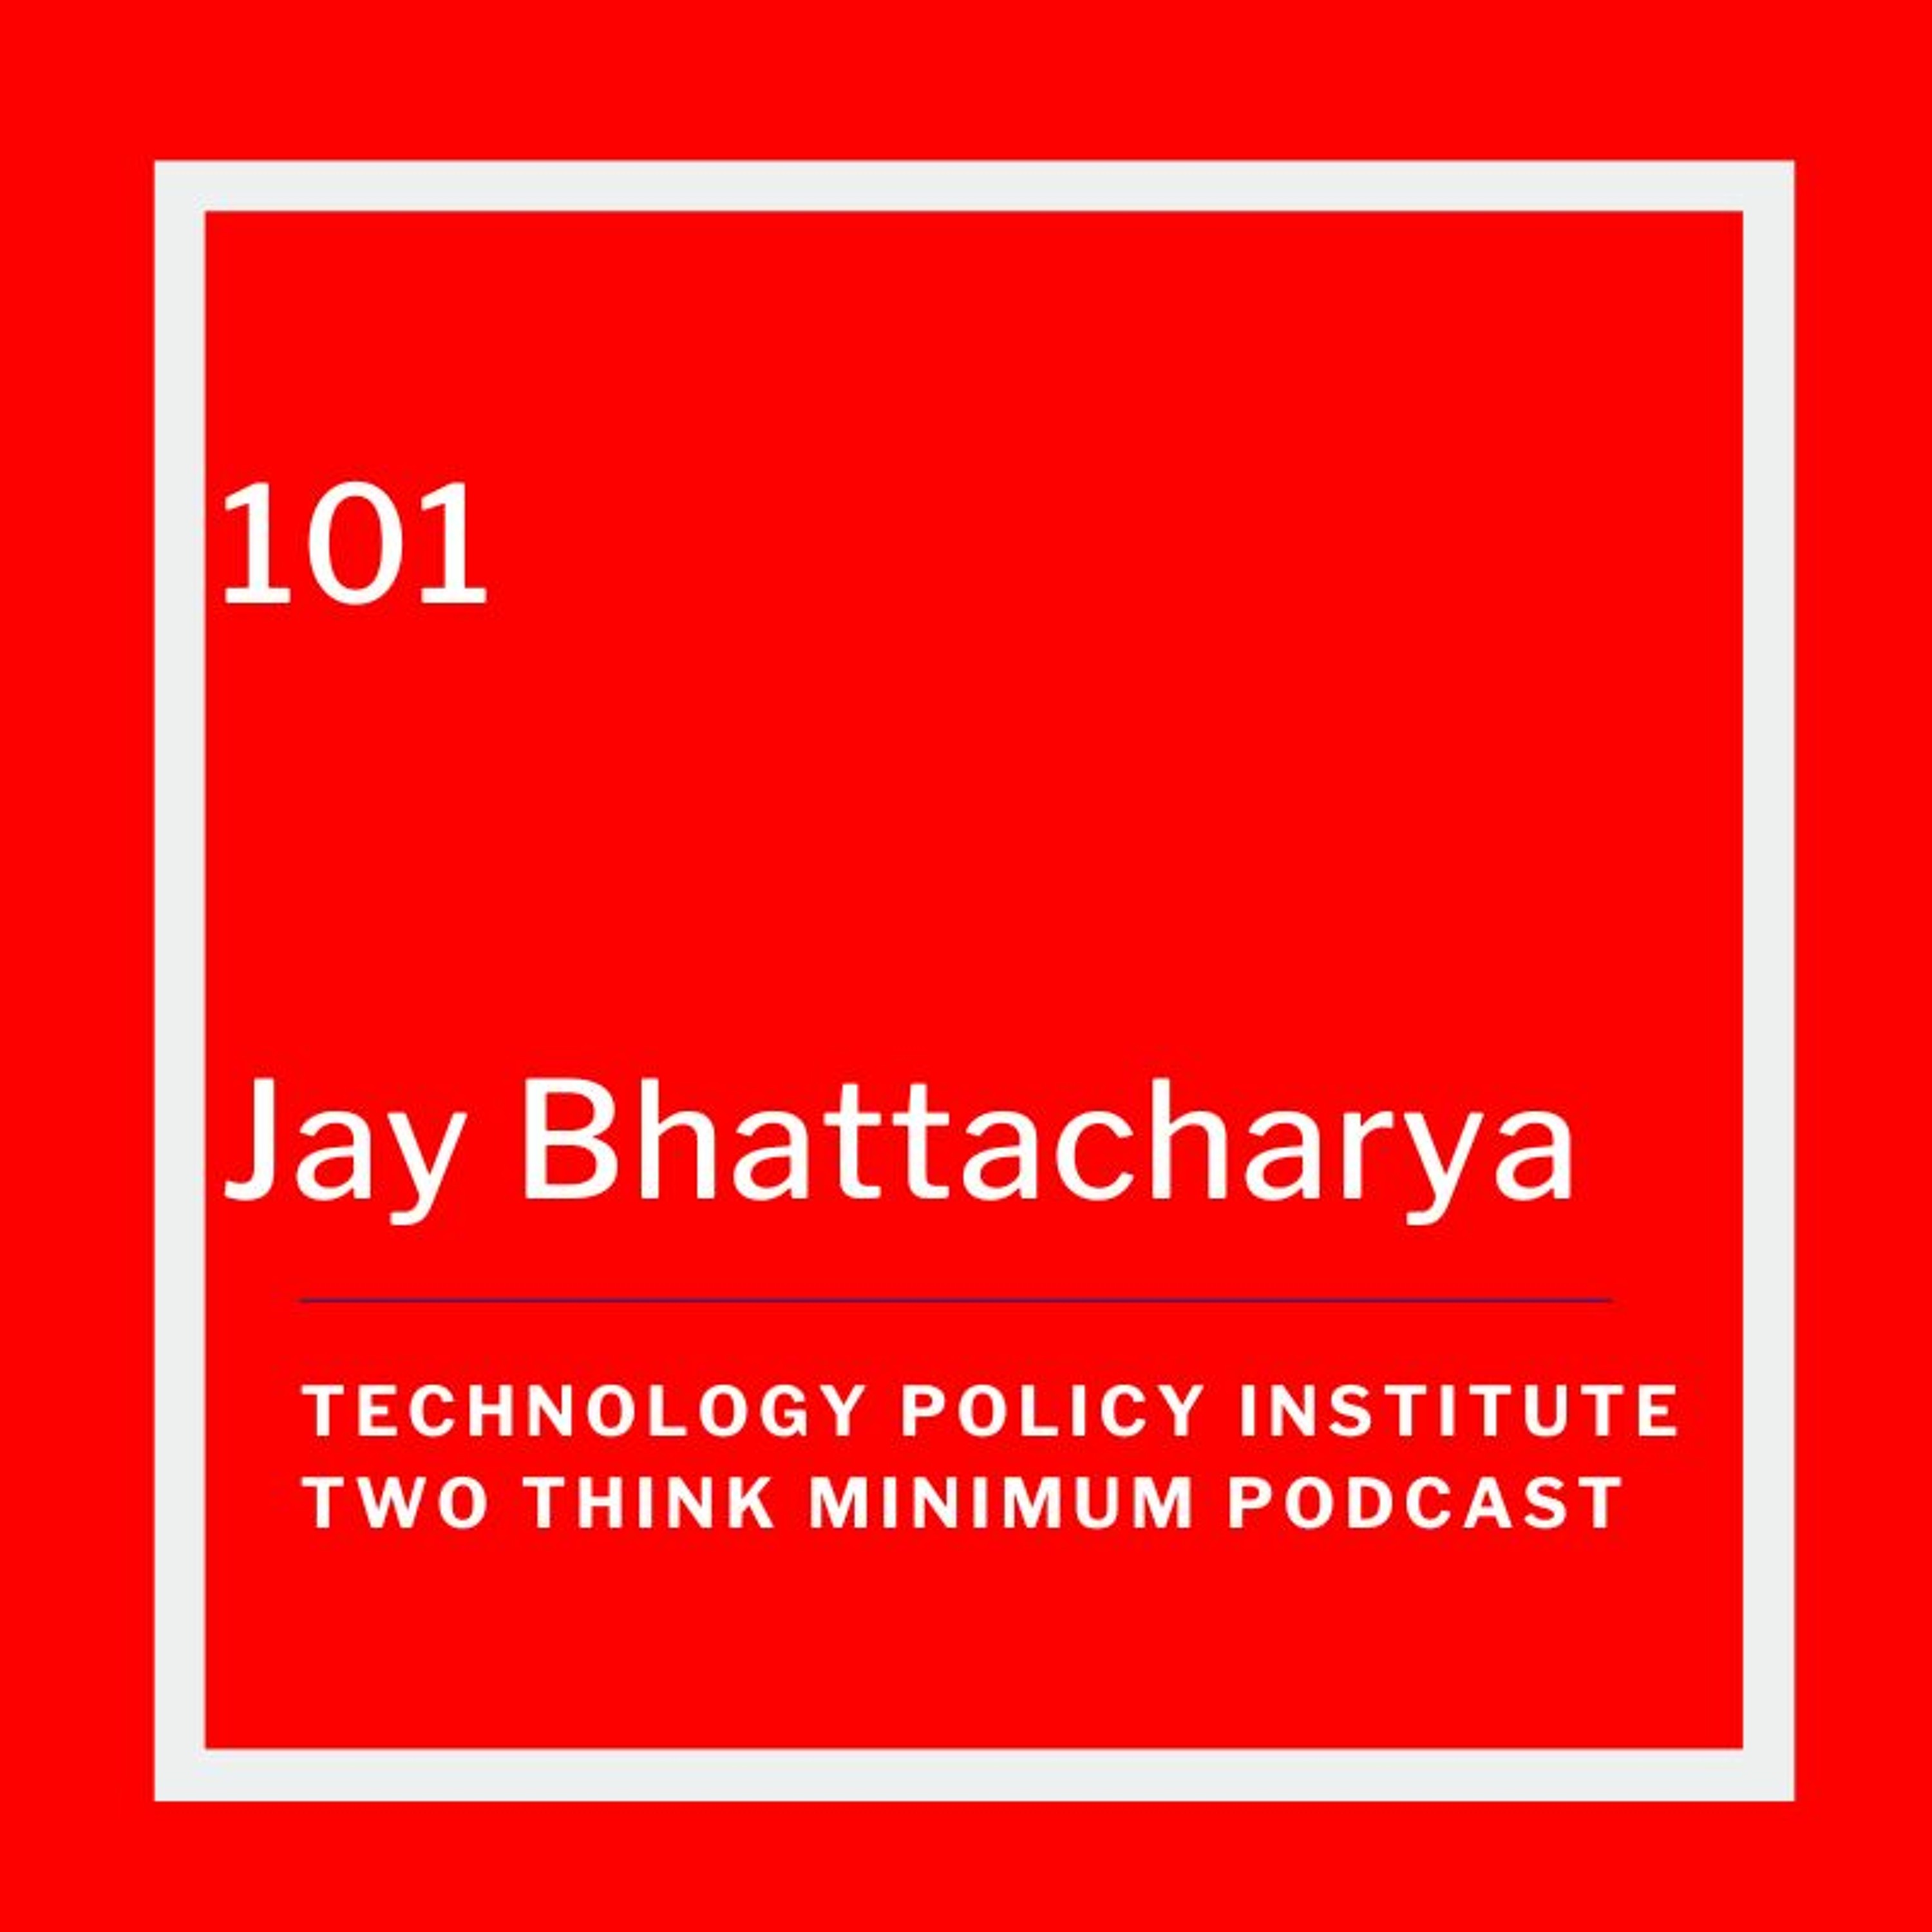 Jay Bhattacharya on Covid Policy Missteps